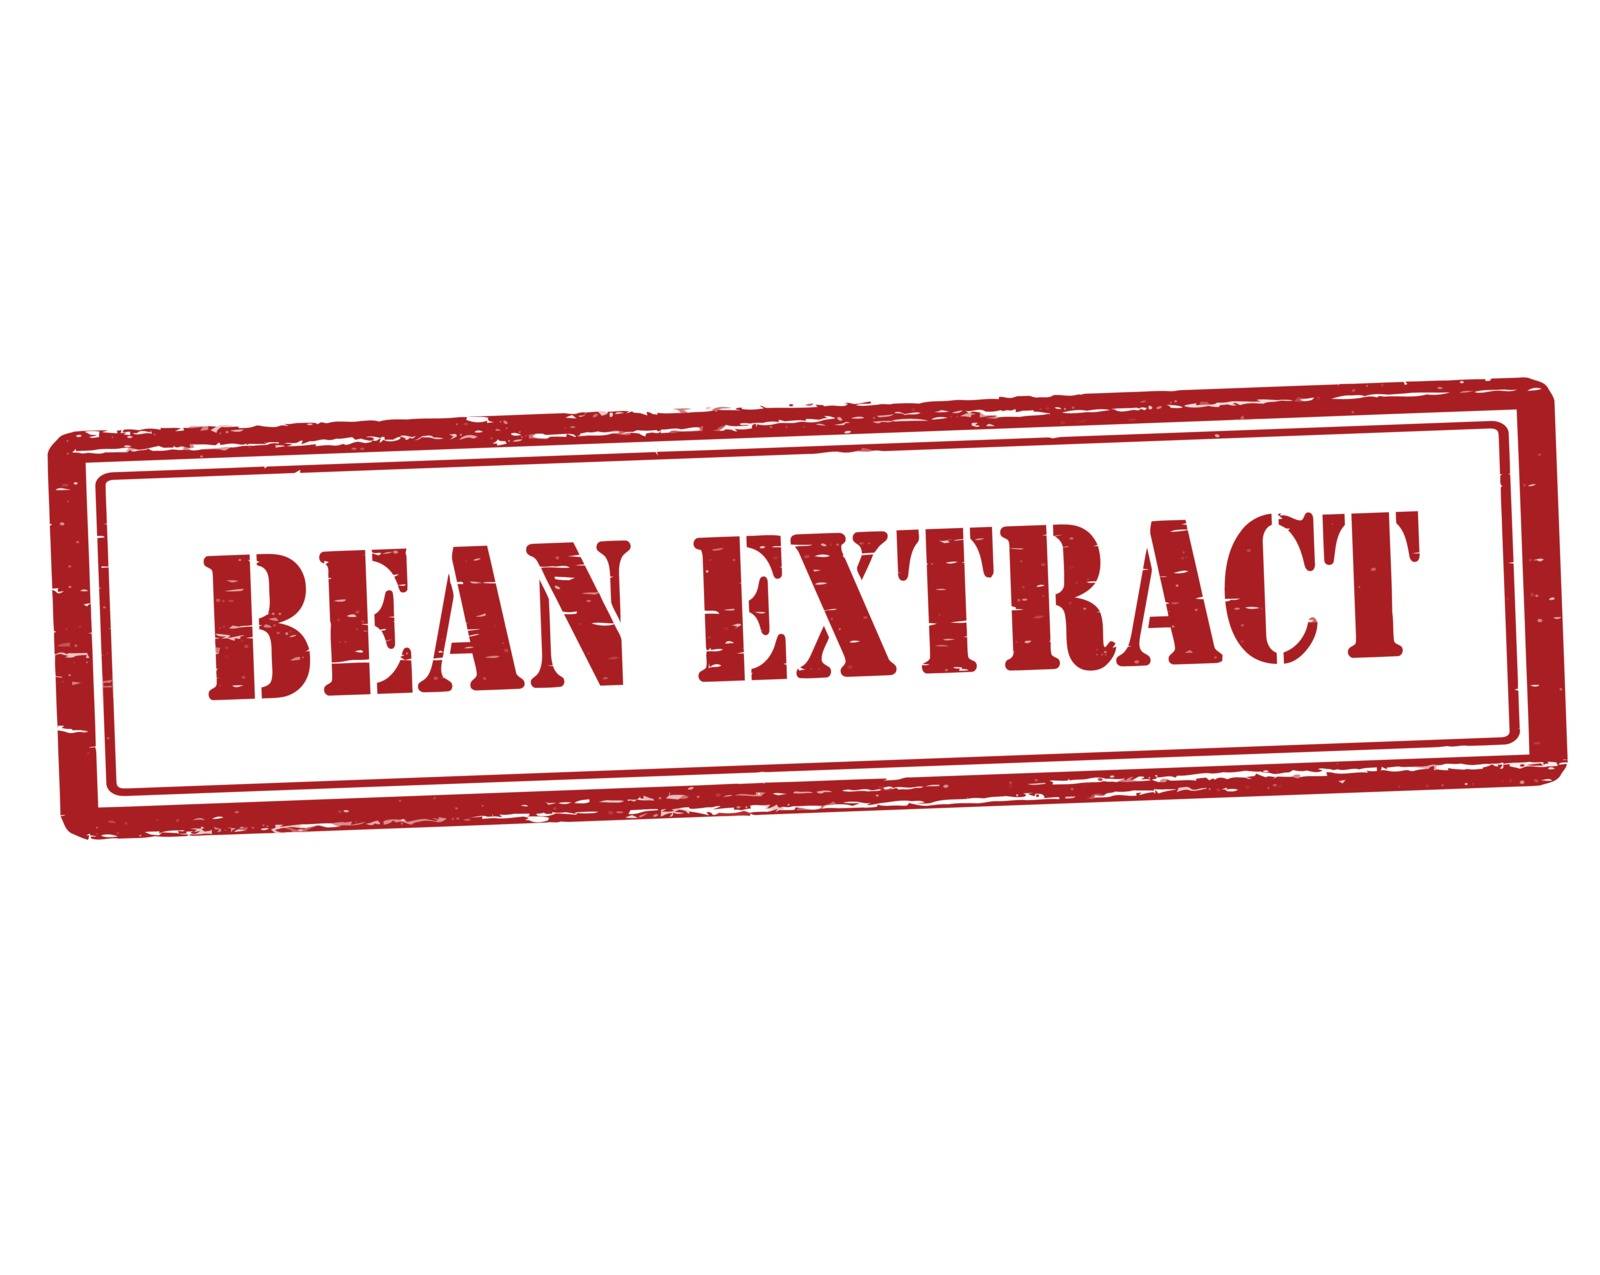 Bean extract by carmenbobo